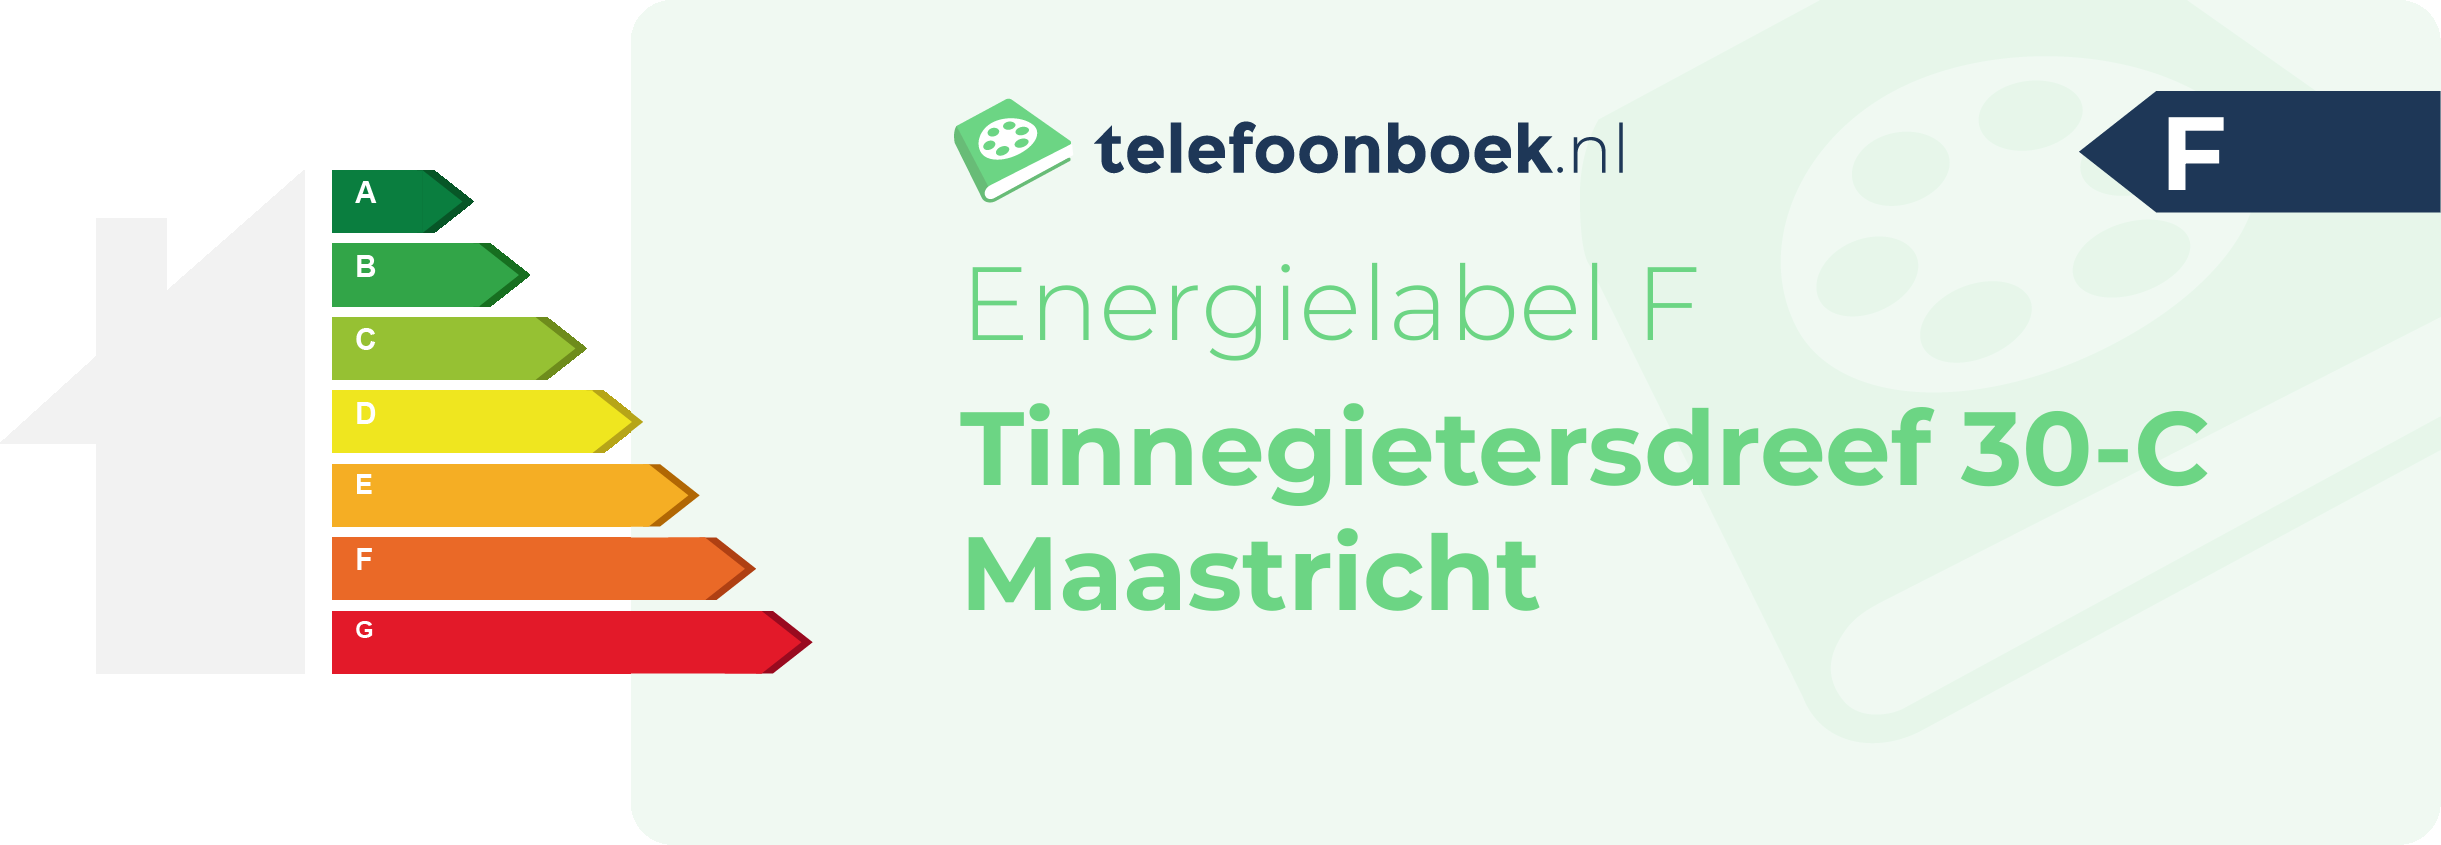 Energielabel Tinnegietersdreef 30-C Maastricht